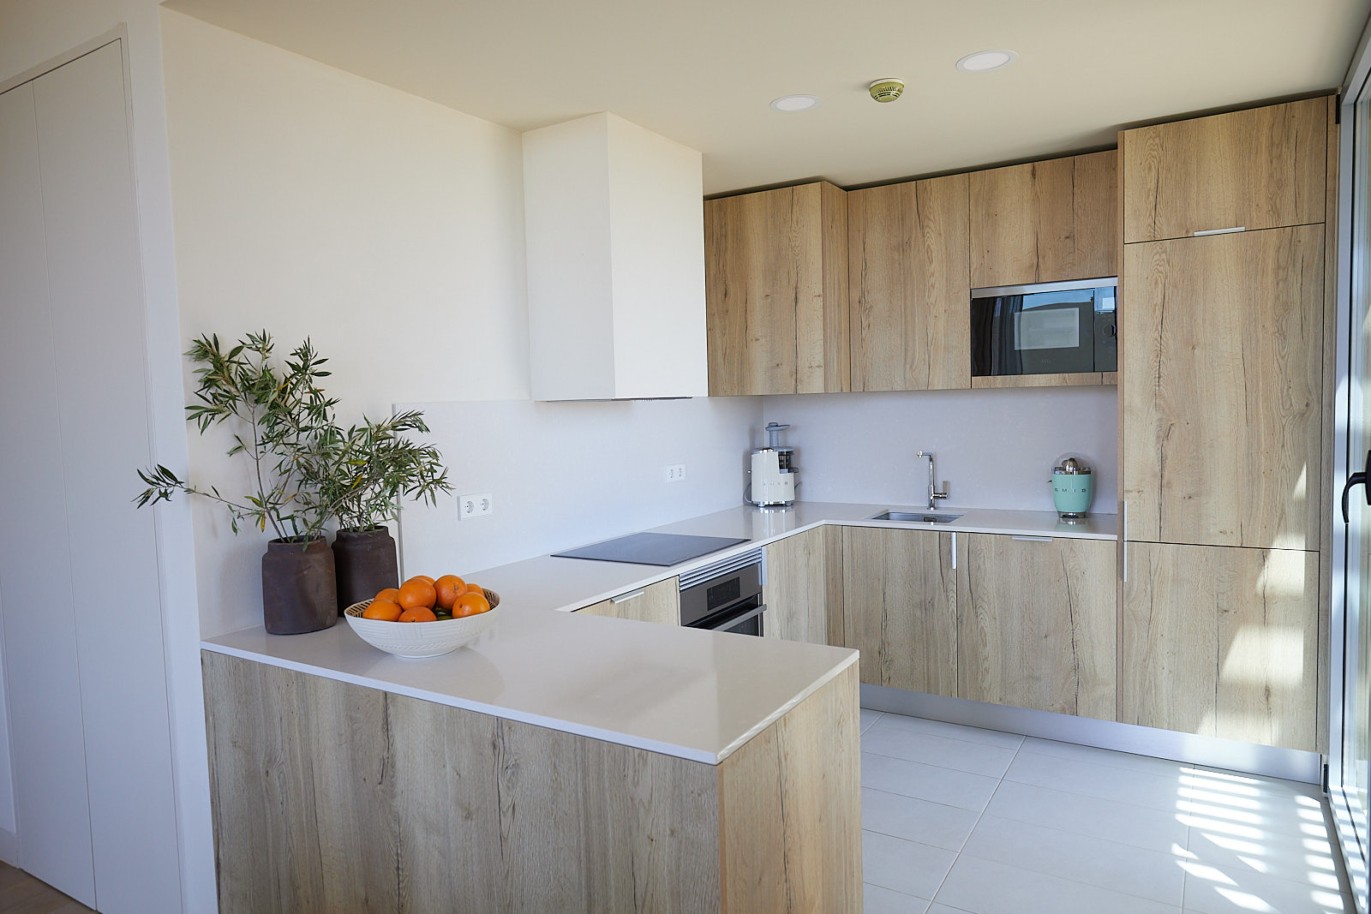 2 bedroom apartment in resort, for sale in Porches, Algarve_230686